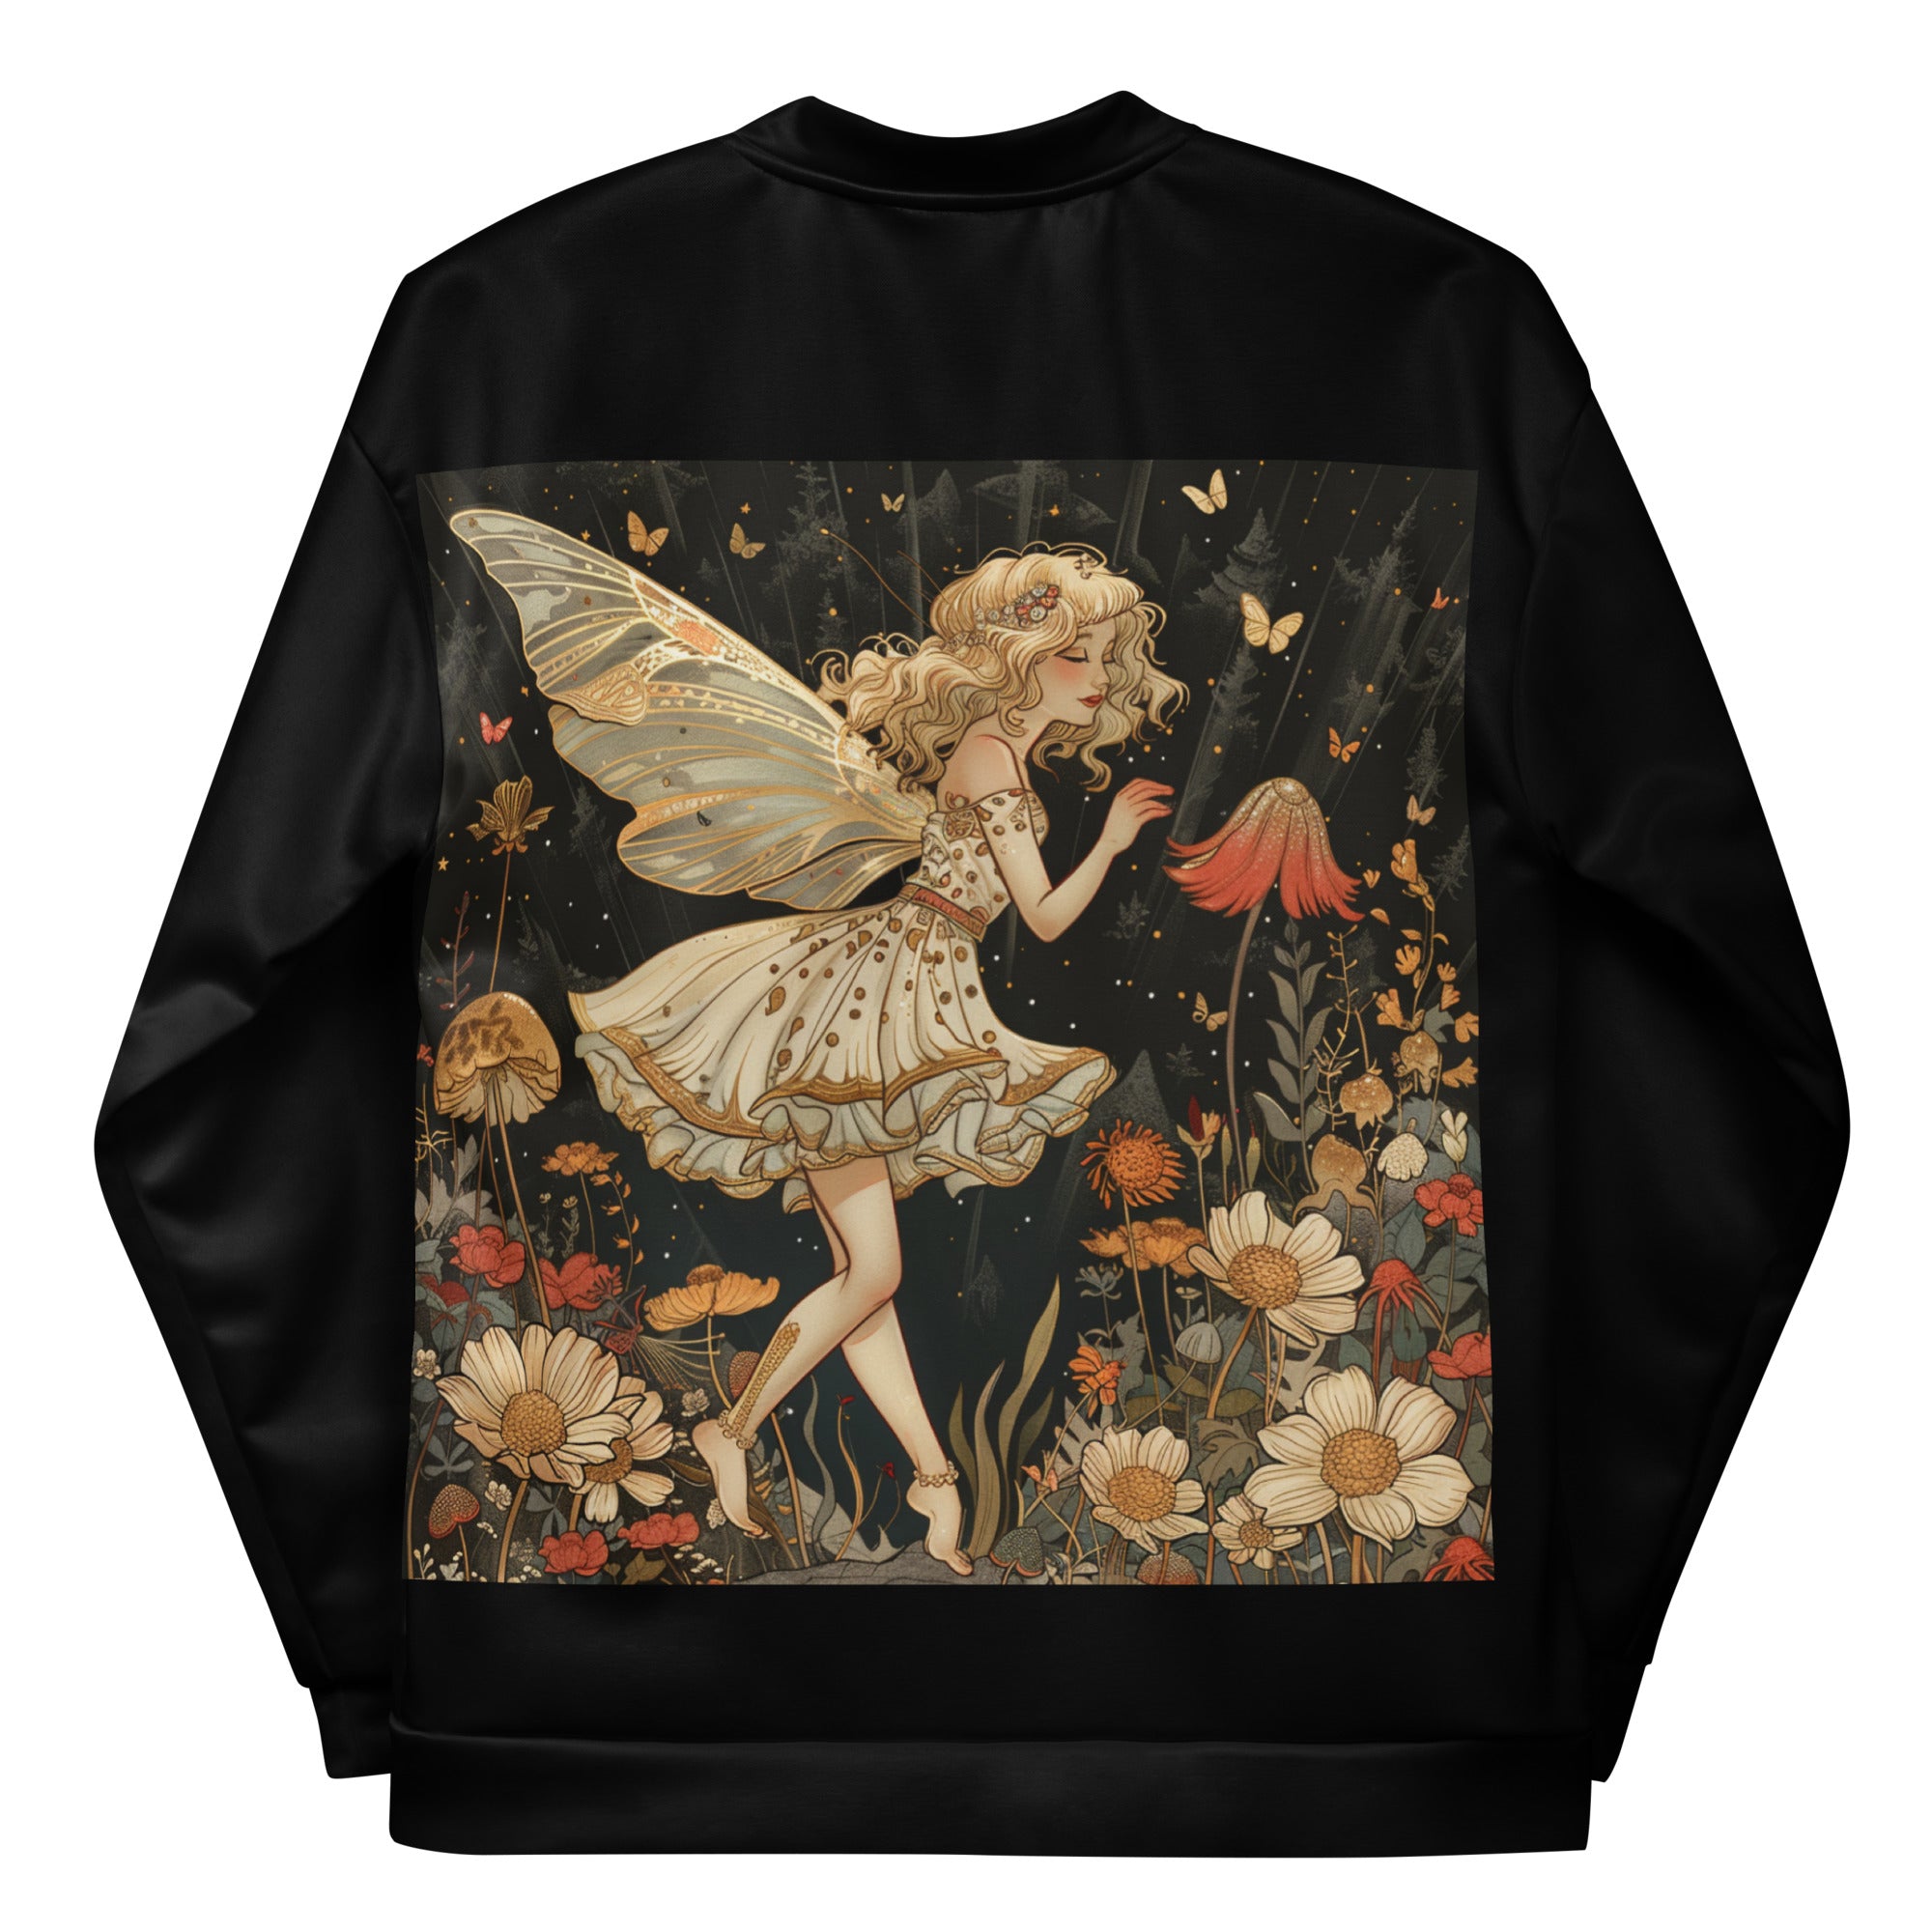 Enchanted Elegance: Women's Fairy Retro Jacket - A Timeless Gift for Her at Any Milestone | Fairy Retro Jacket